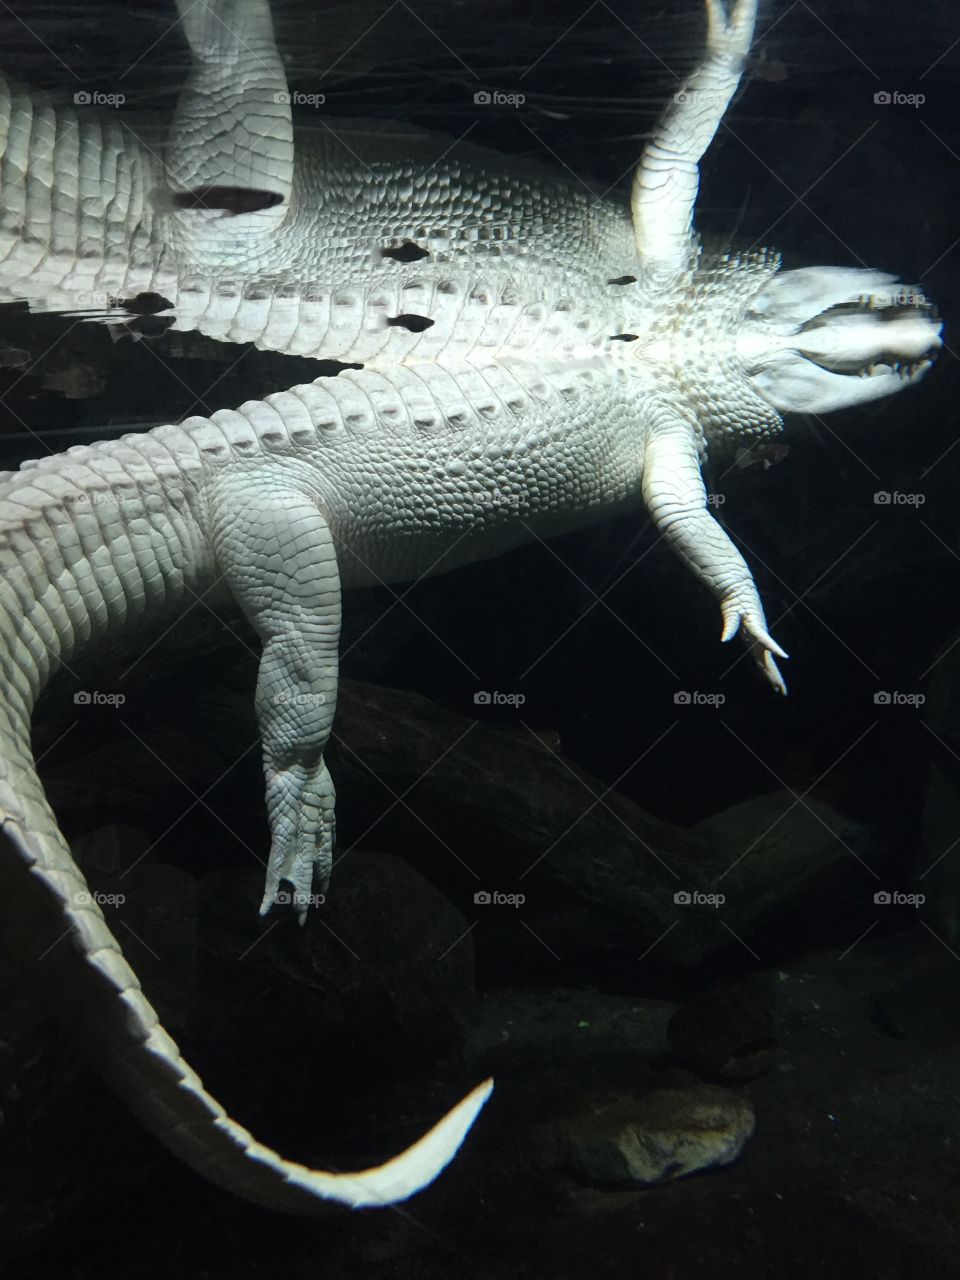 Albino alligator 